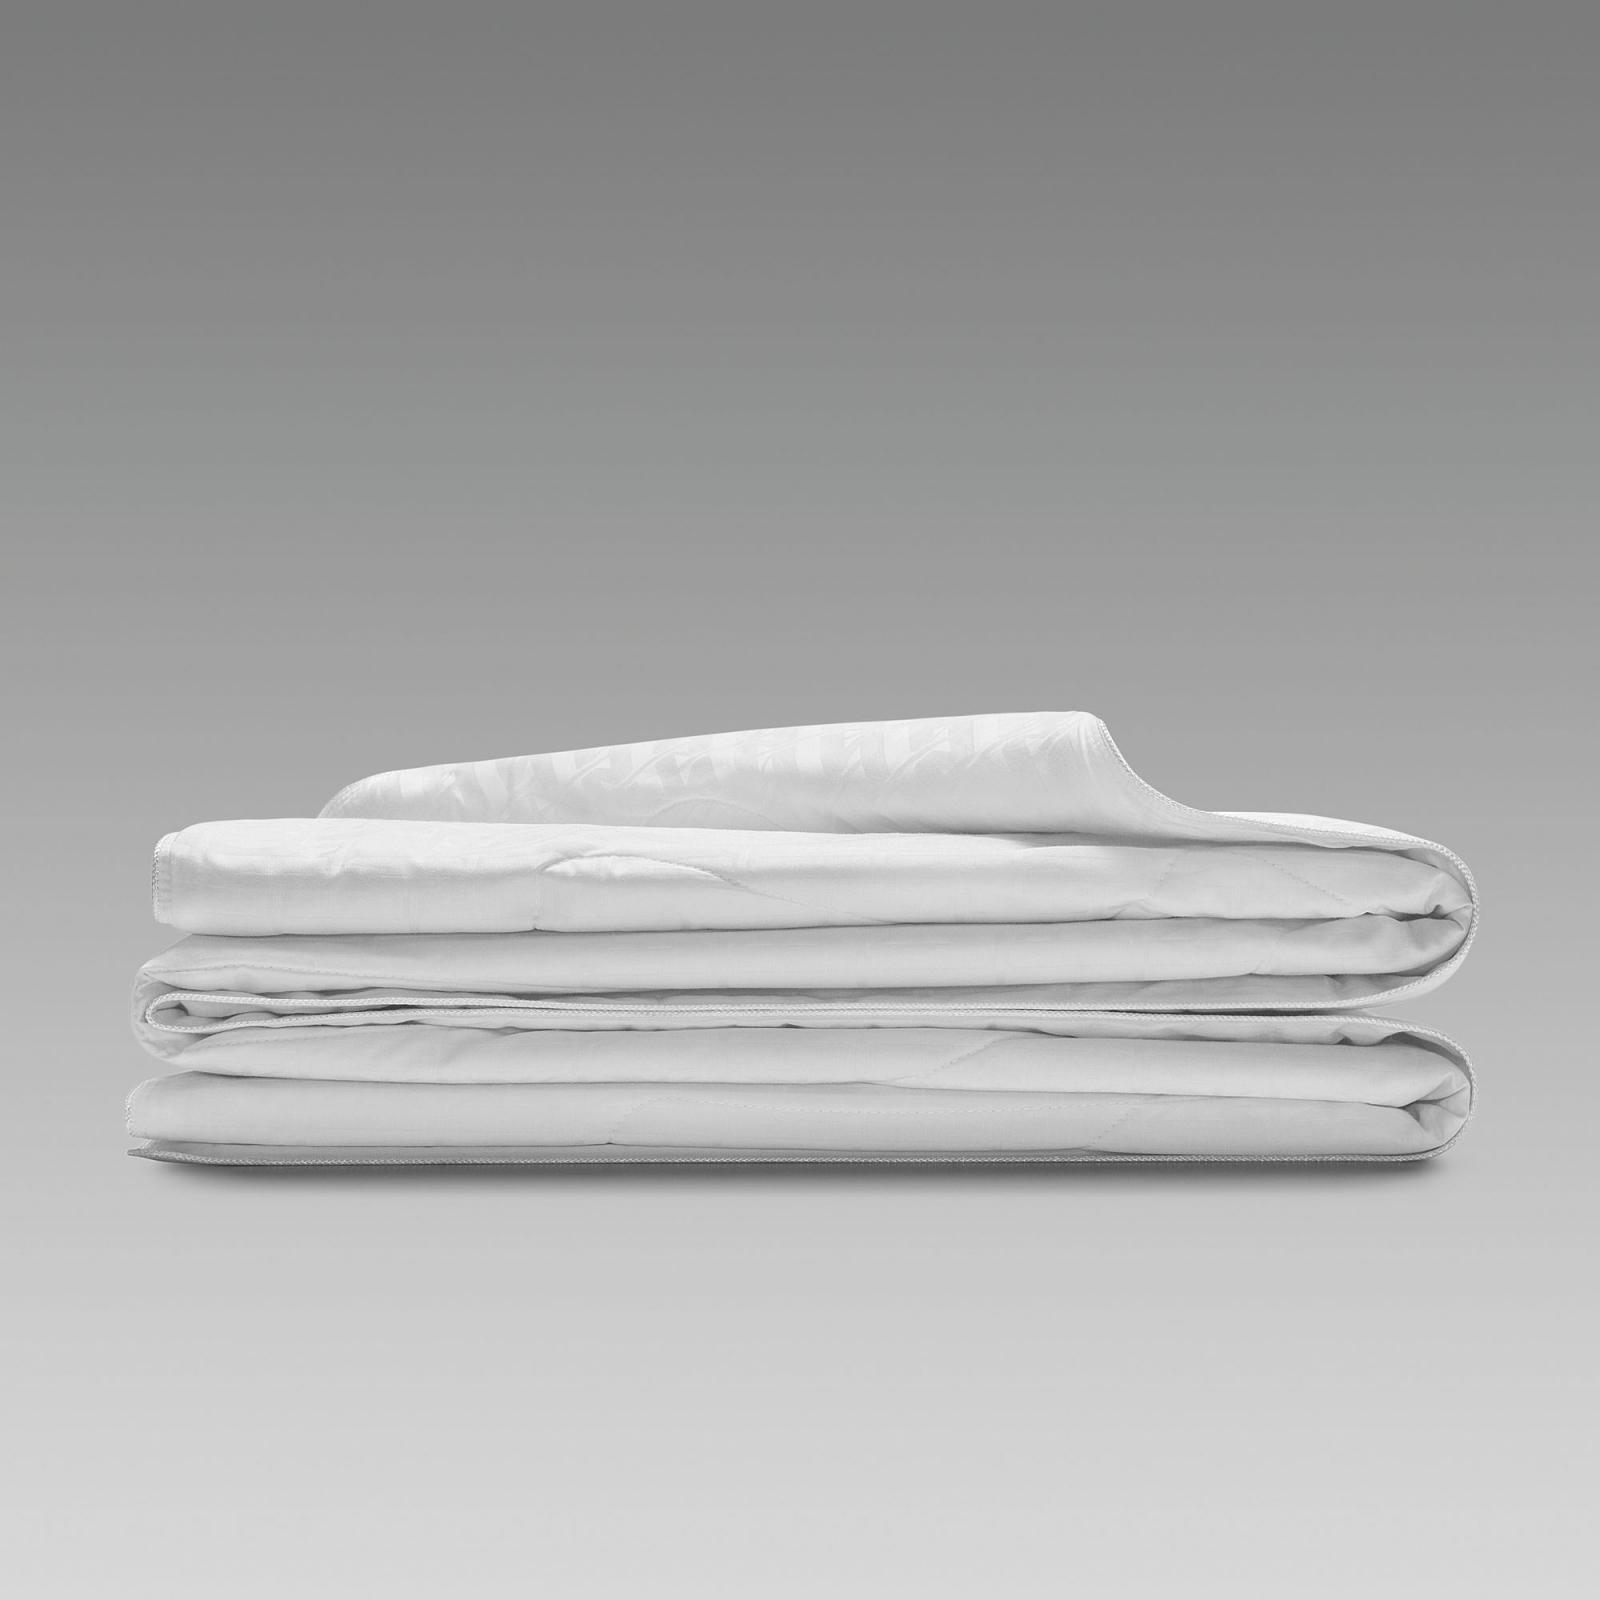 Одеяло Селена лайт Togas 220х240, размер 220х240 см - фото 5